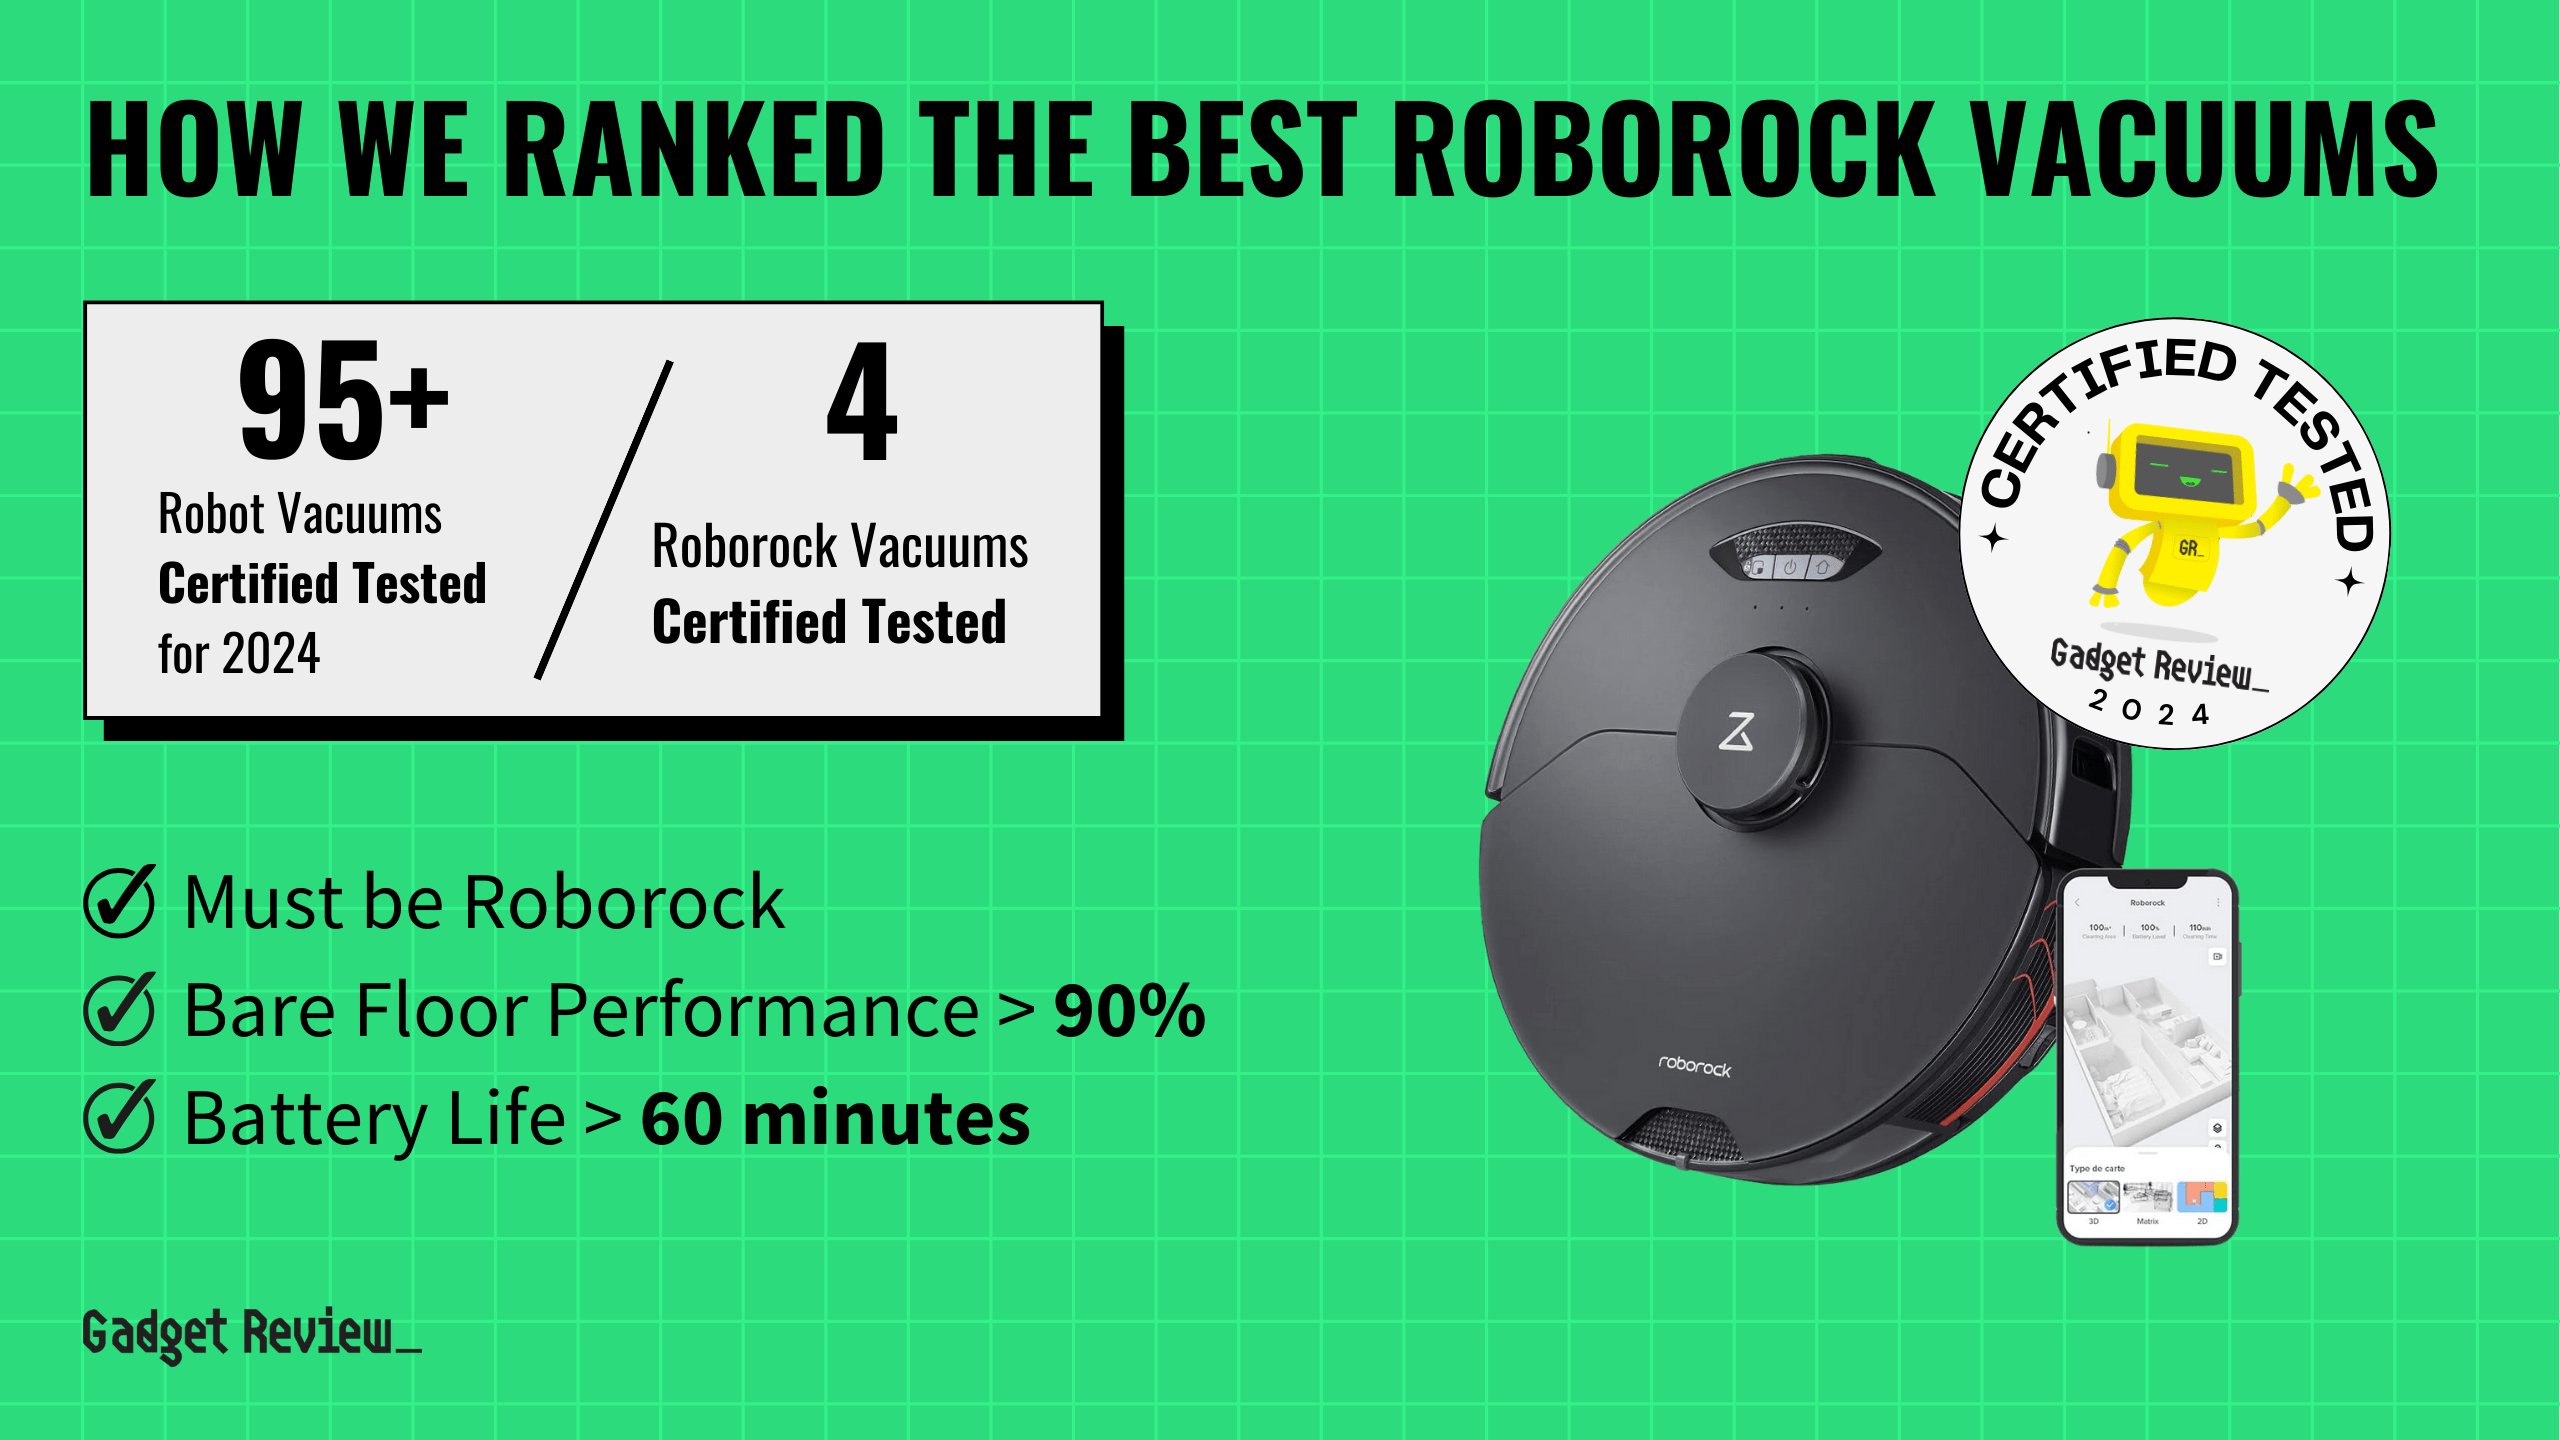 best roborock vacuum guide that shows the top best robot vacuum model